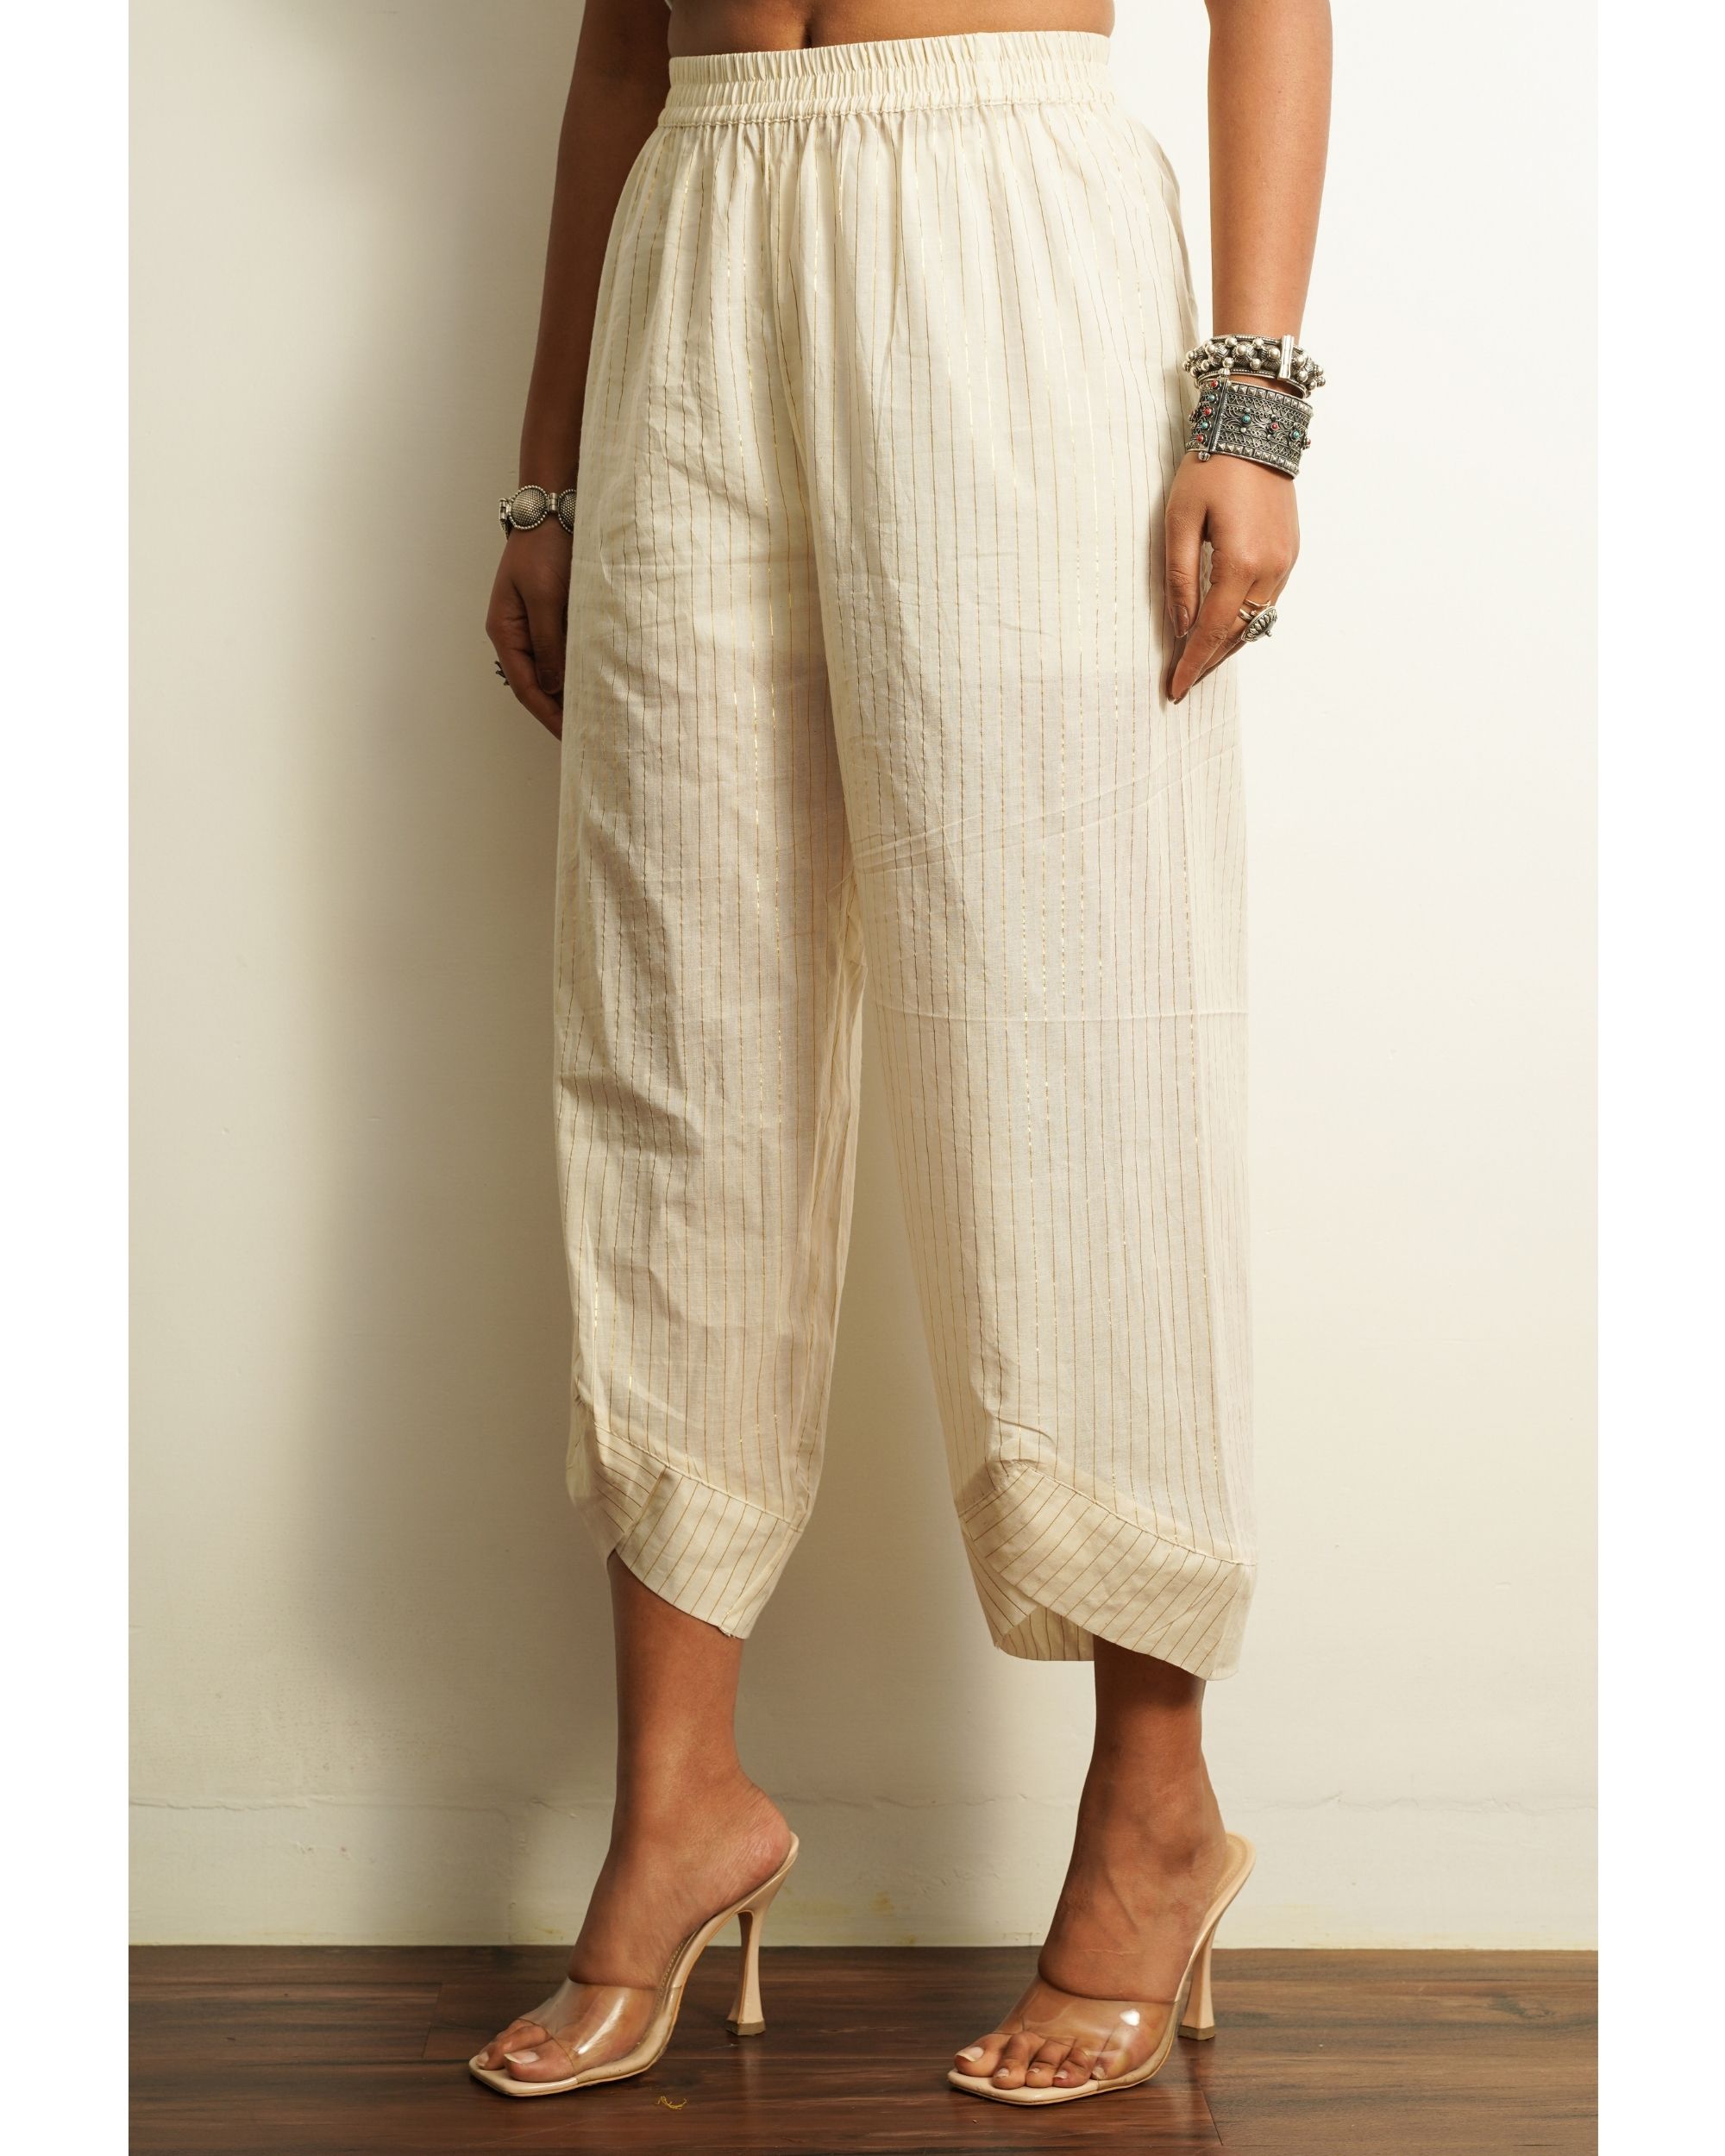 White strips ankle length cotton pant by Keva